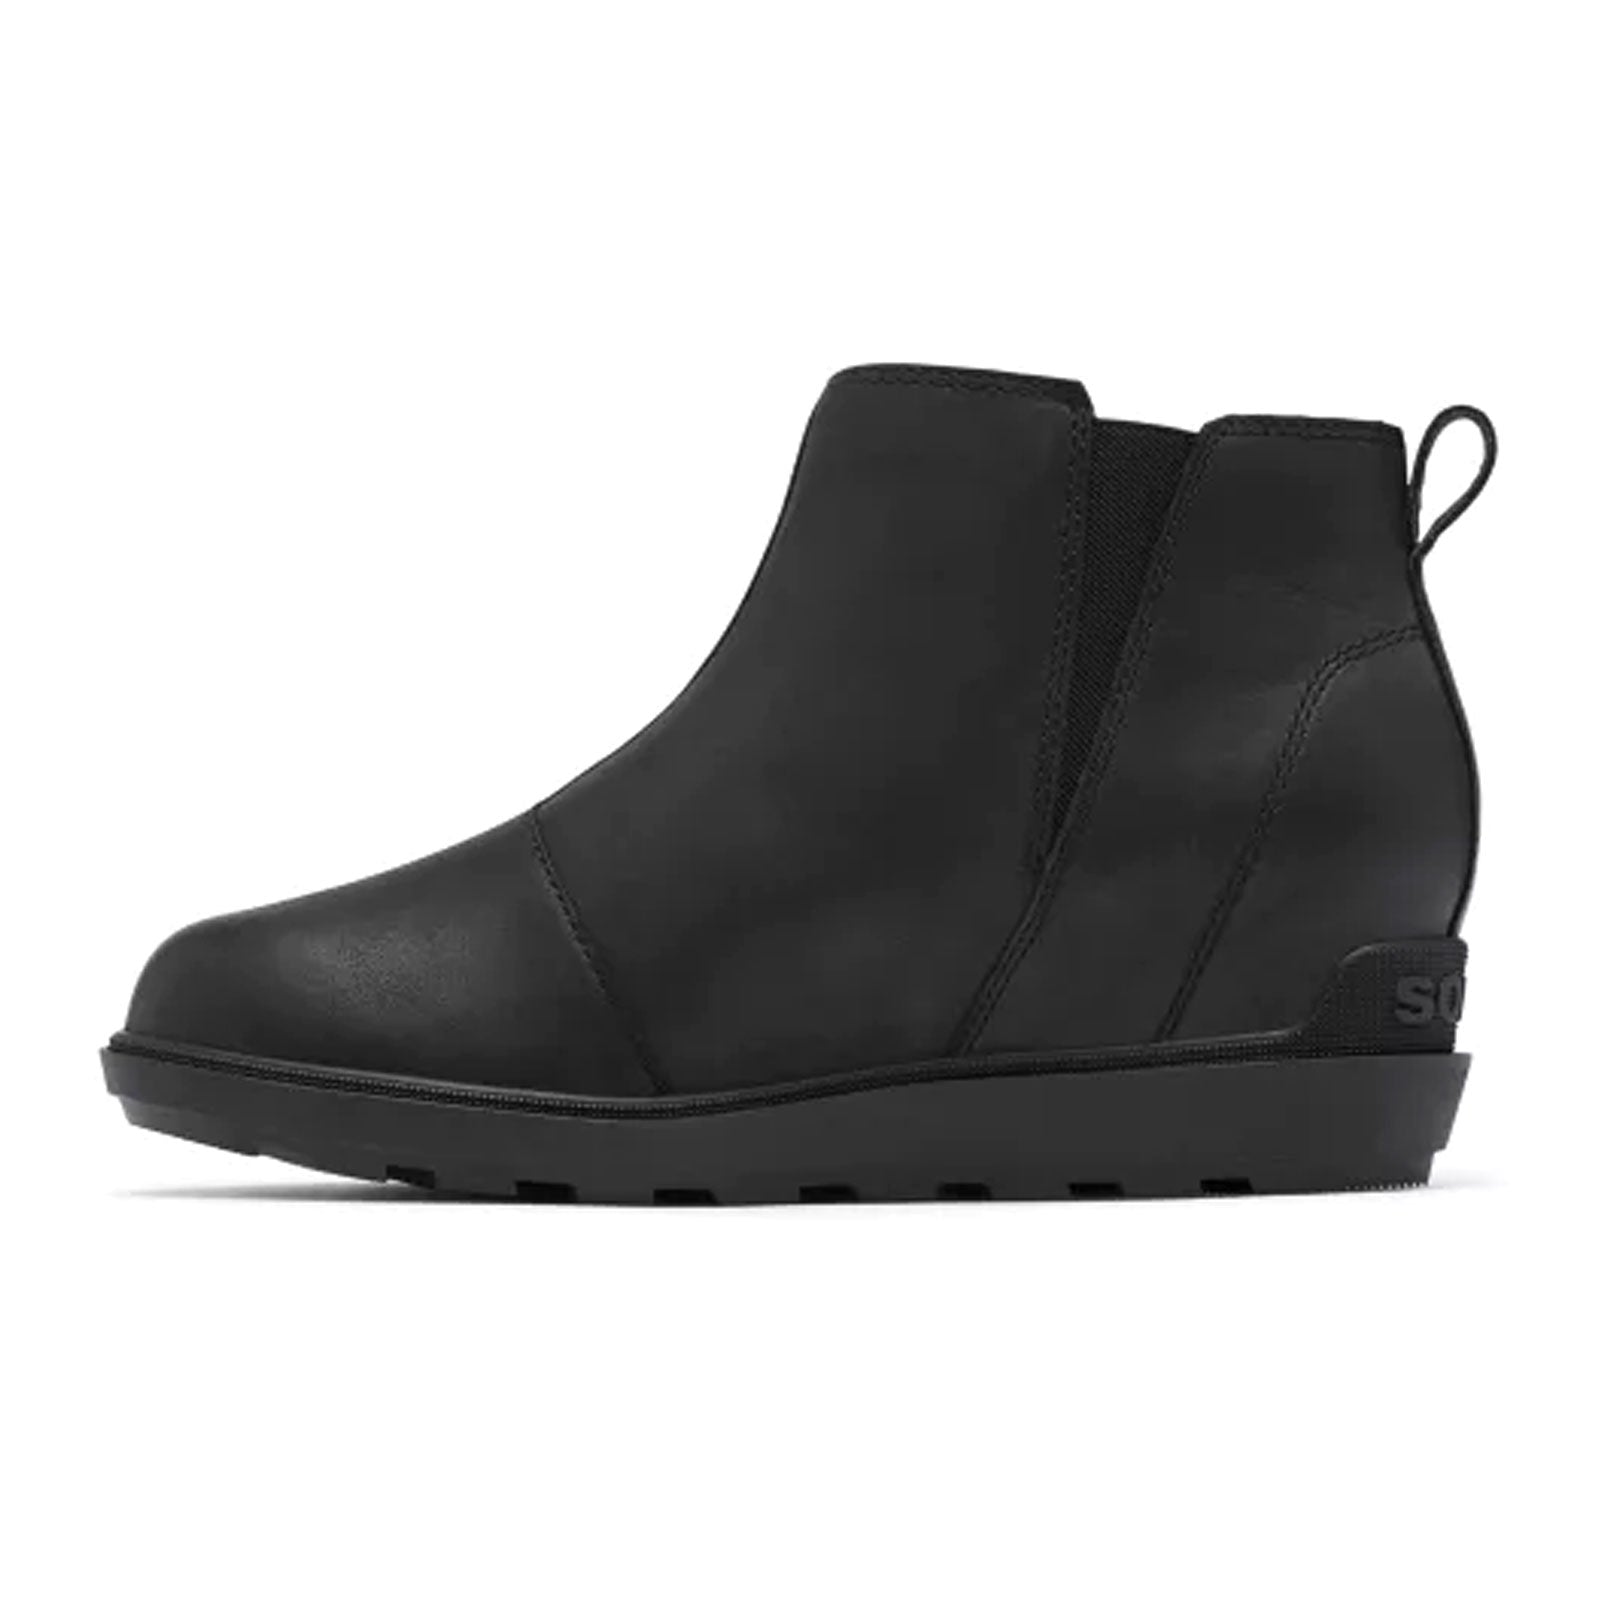 Sorel Evie II Zip Wedge Ankle Boot (Women) - Black